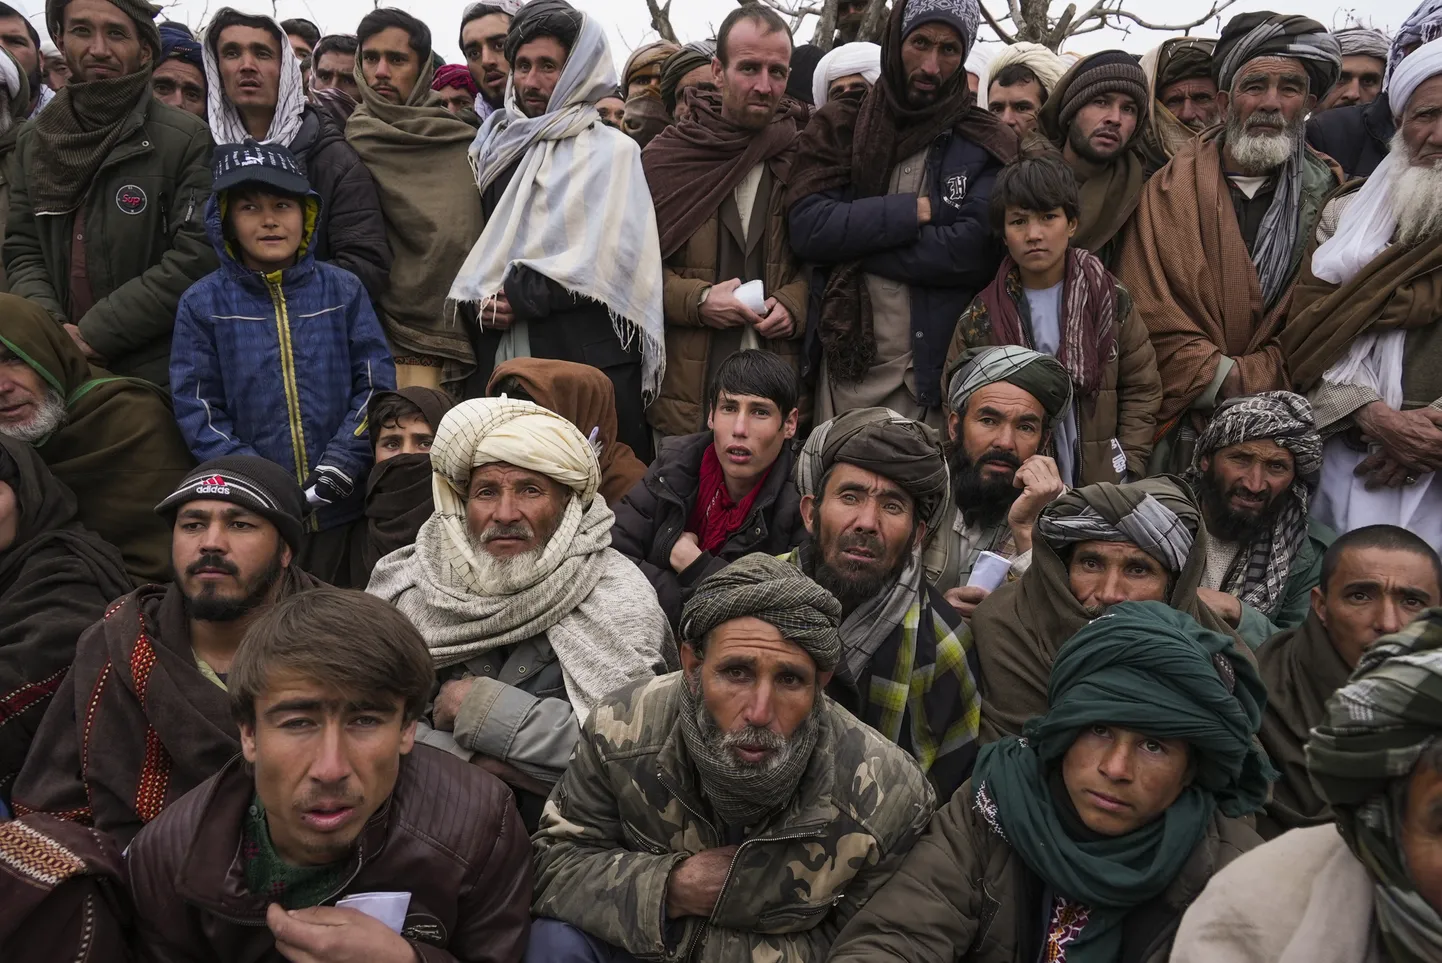 Sajad mehed taotlemas Afganistanis humanitaarabi.